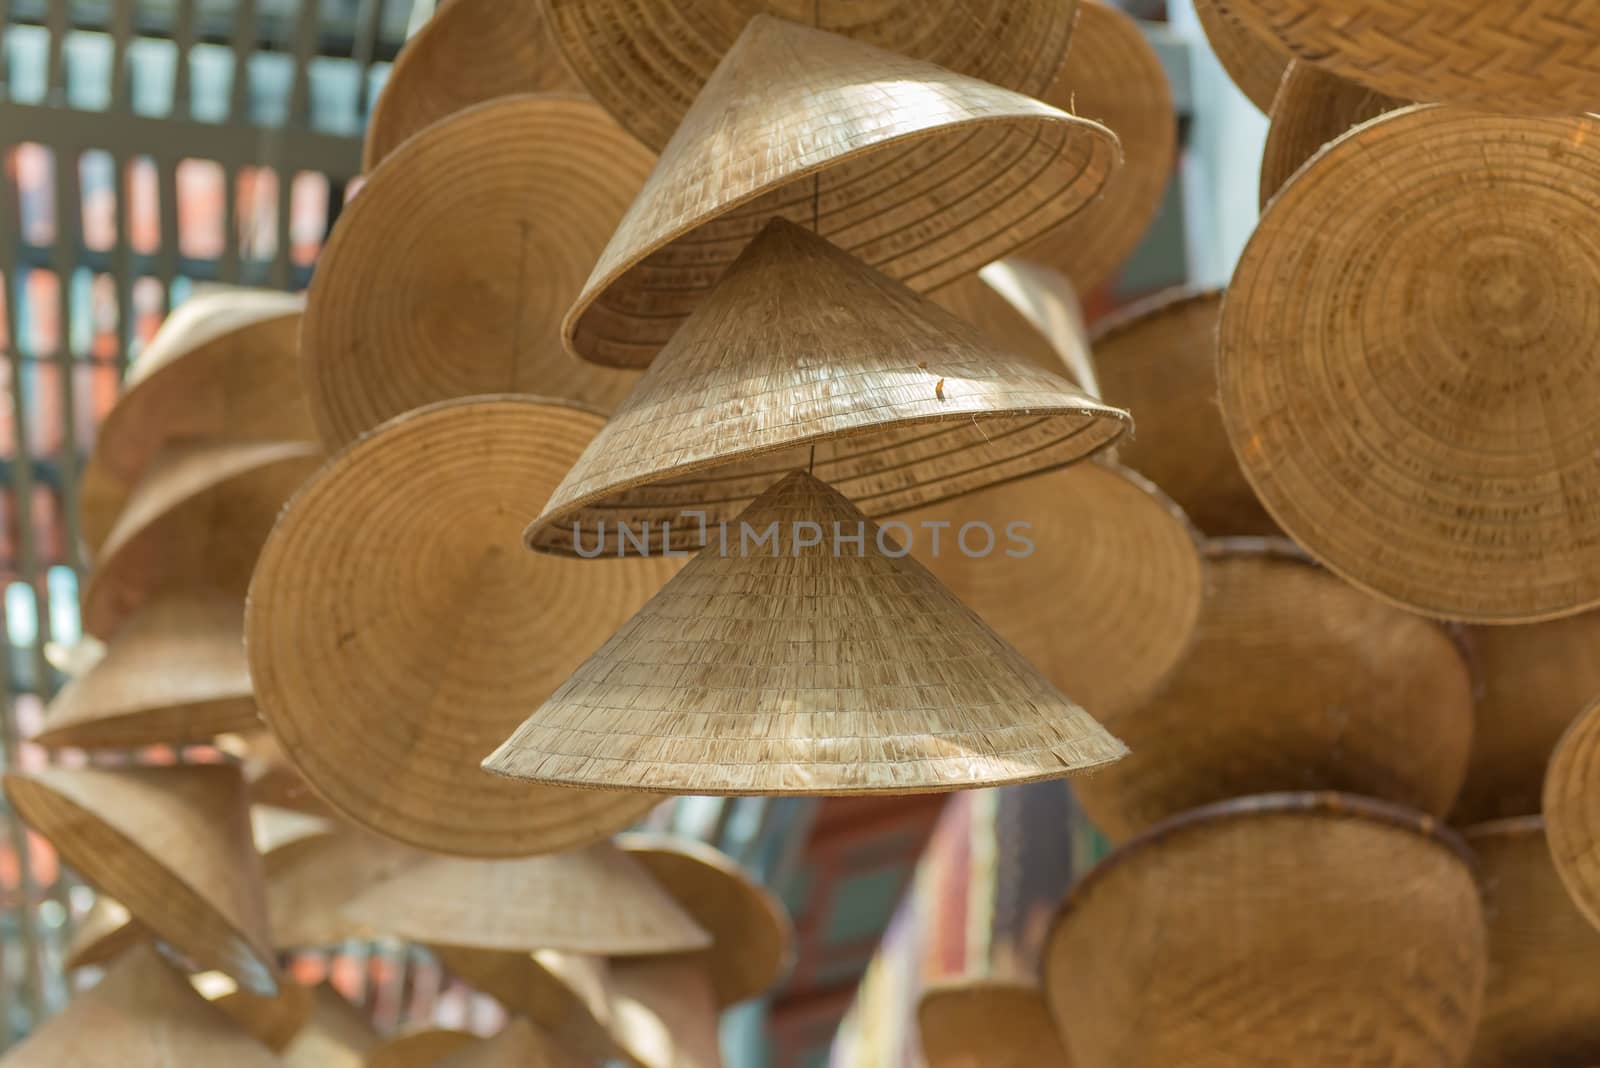 straw hat or conical Vietnamese hats in Vietnam.